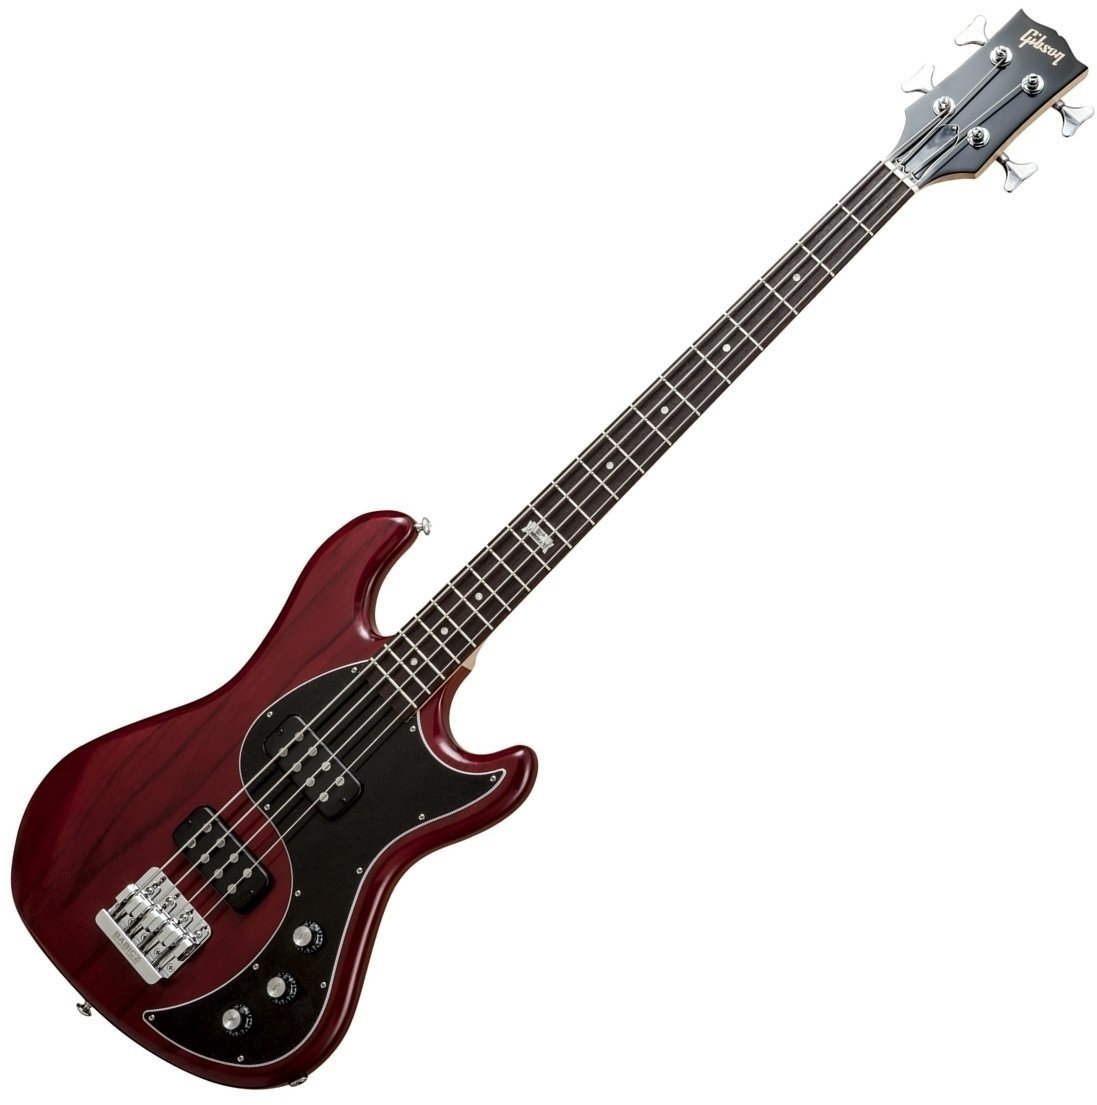 Basse électrique Gibson EB 2014 Red Vintage Gloss